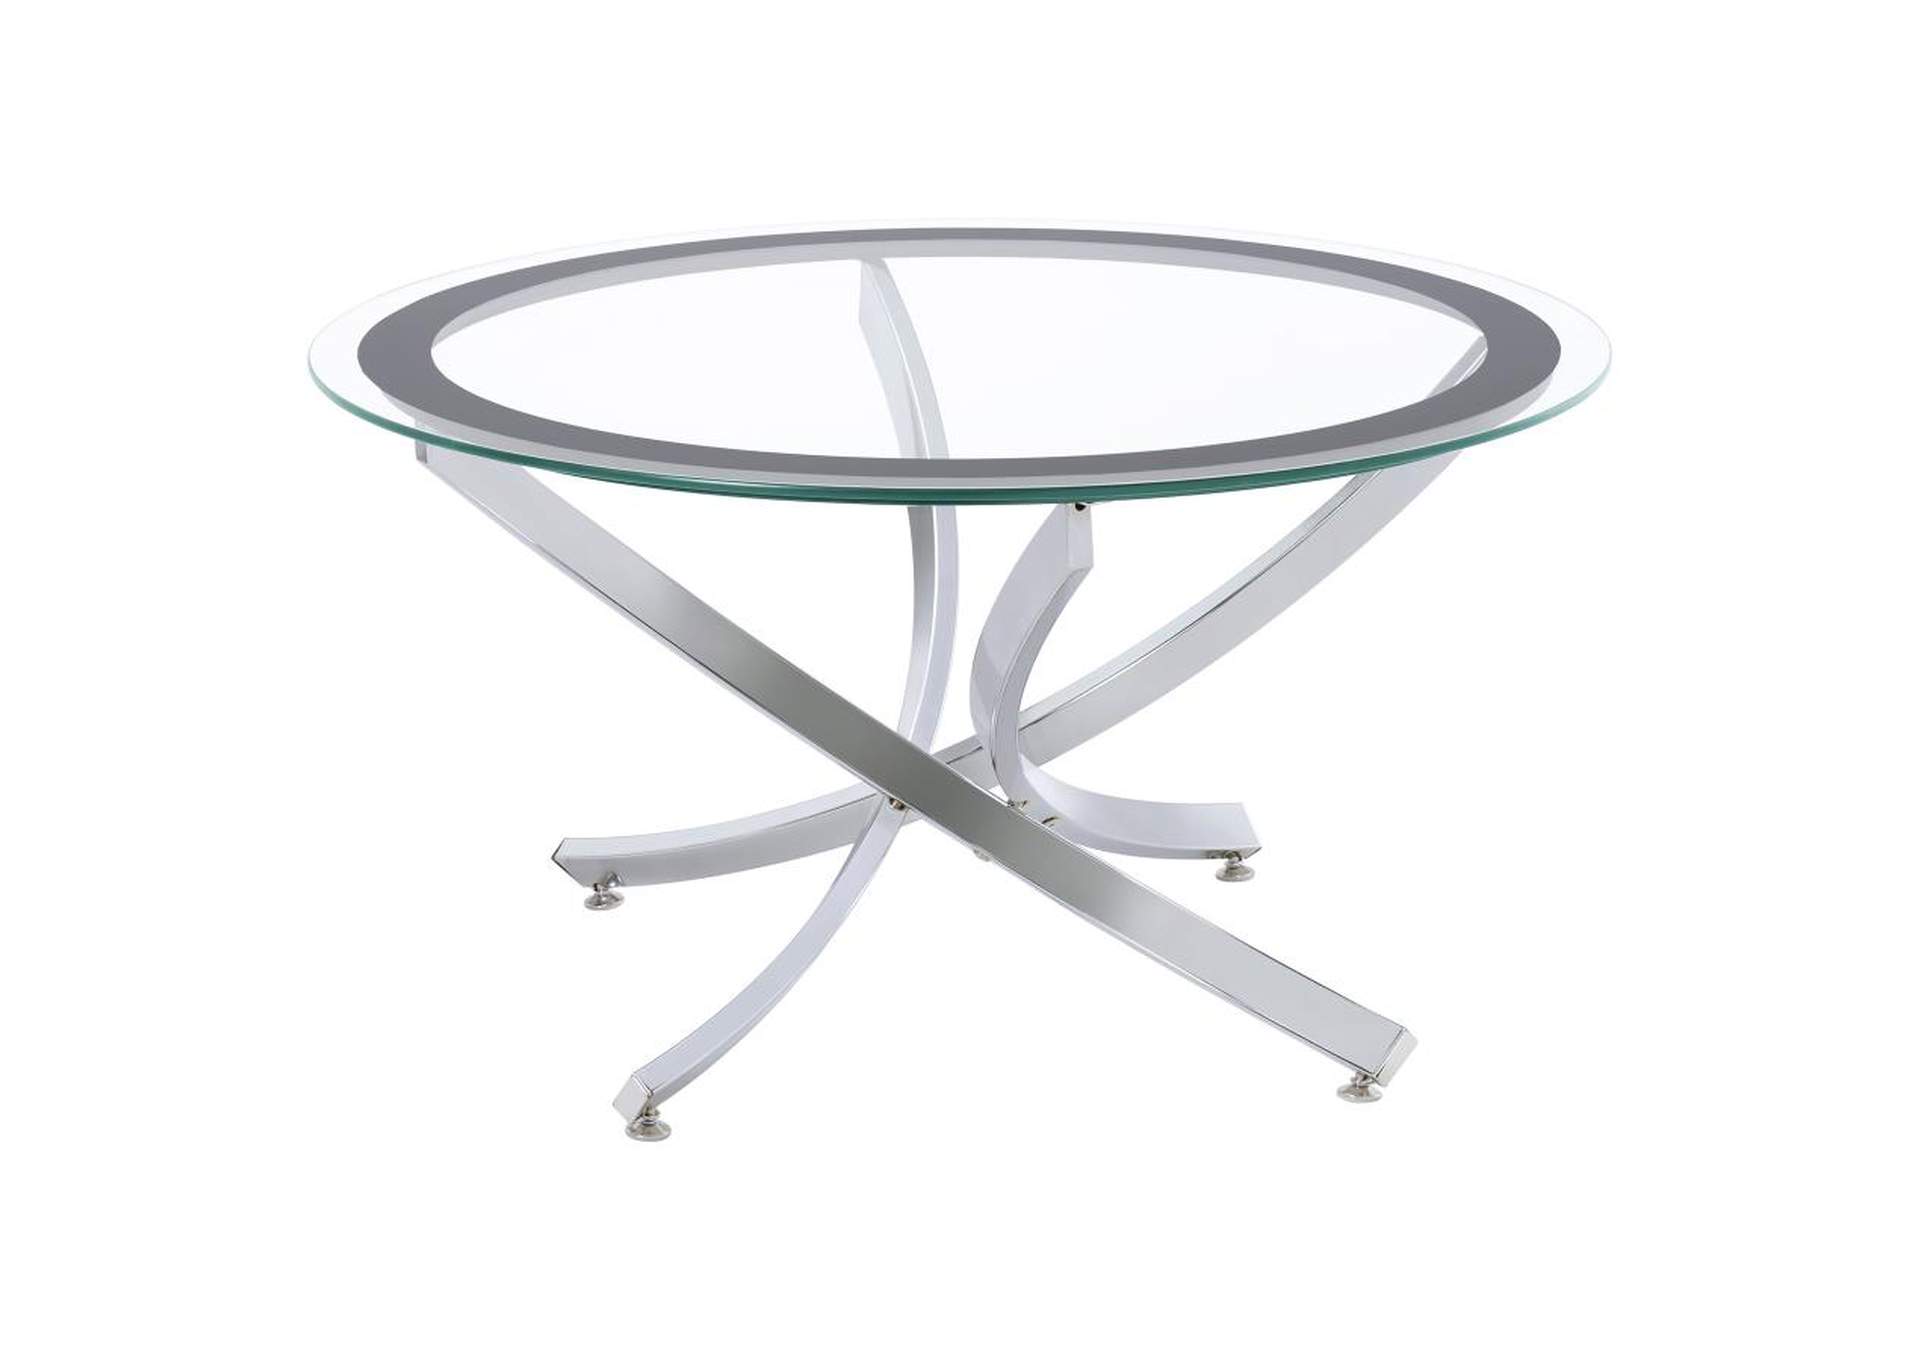 Brooke Glass Top Coffee Table Chrome And Black,Coaster Furniture